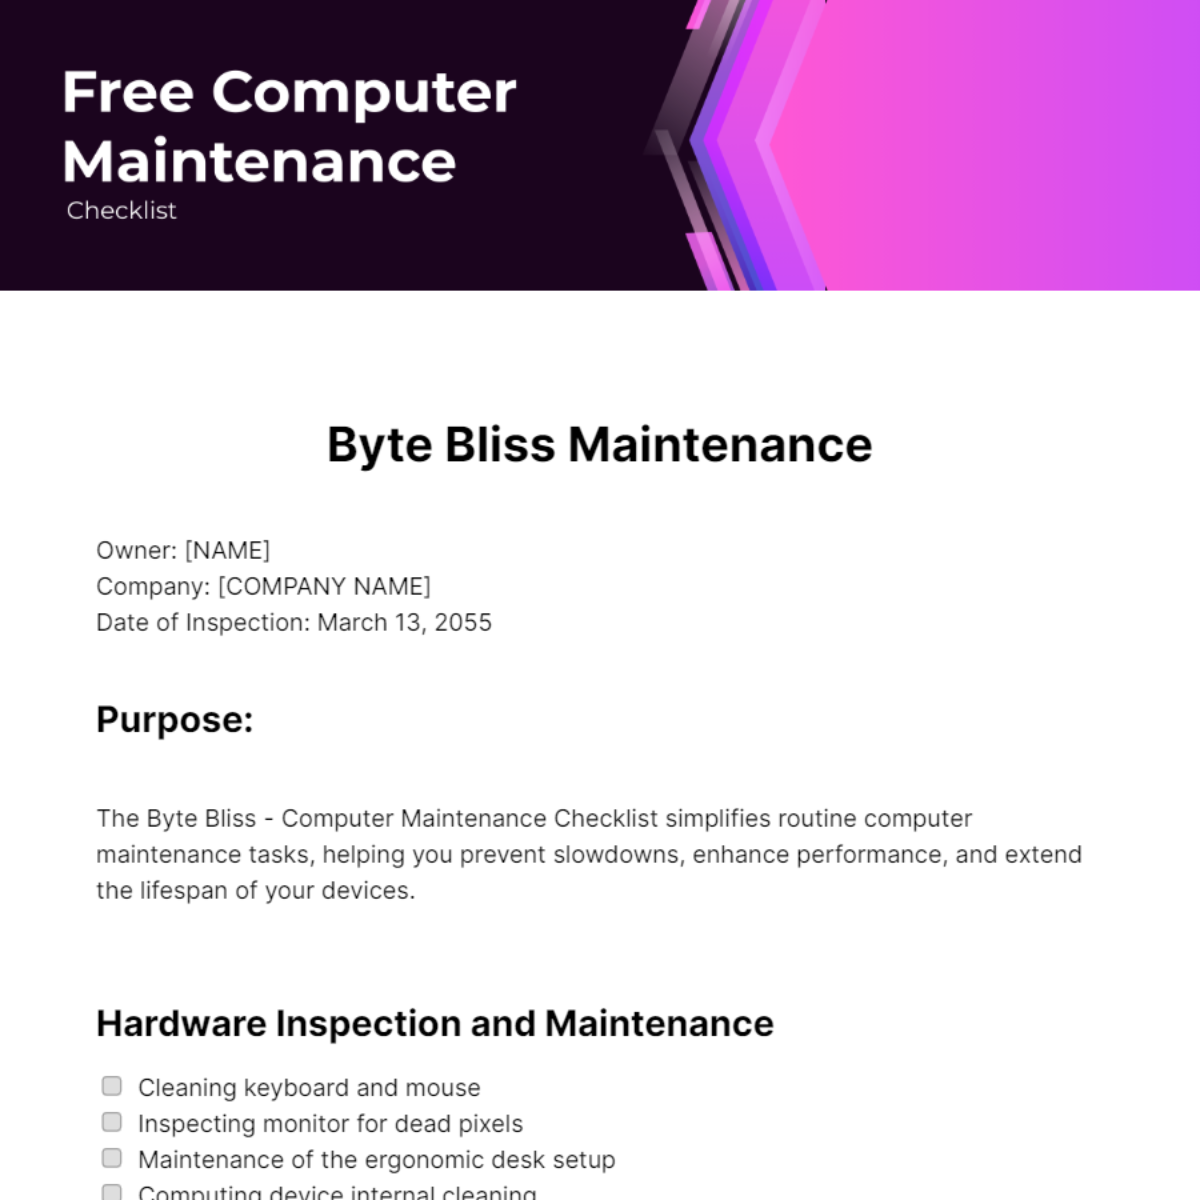 Free Computer Maintenance Checklist Template